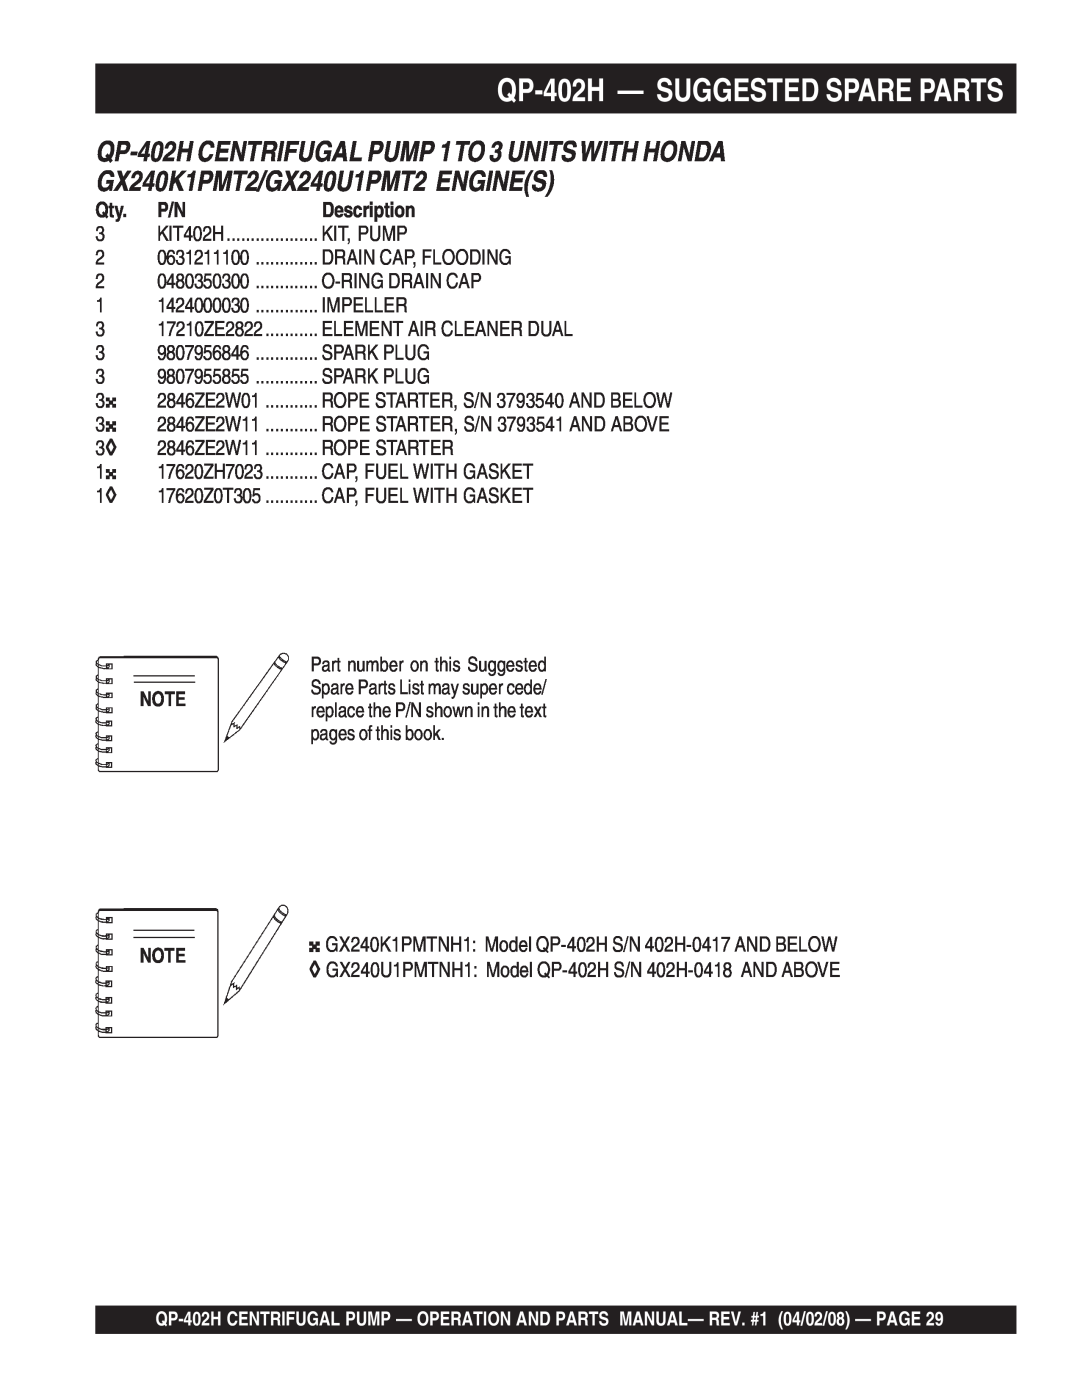 Multiquip qp-402h manual QP-402H- SUGGESTED SPARE PARTS, Description, QP-402HCENTRIFUGAL PUMP 1TO 3 UNITSWITH HONDA 